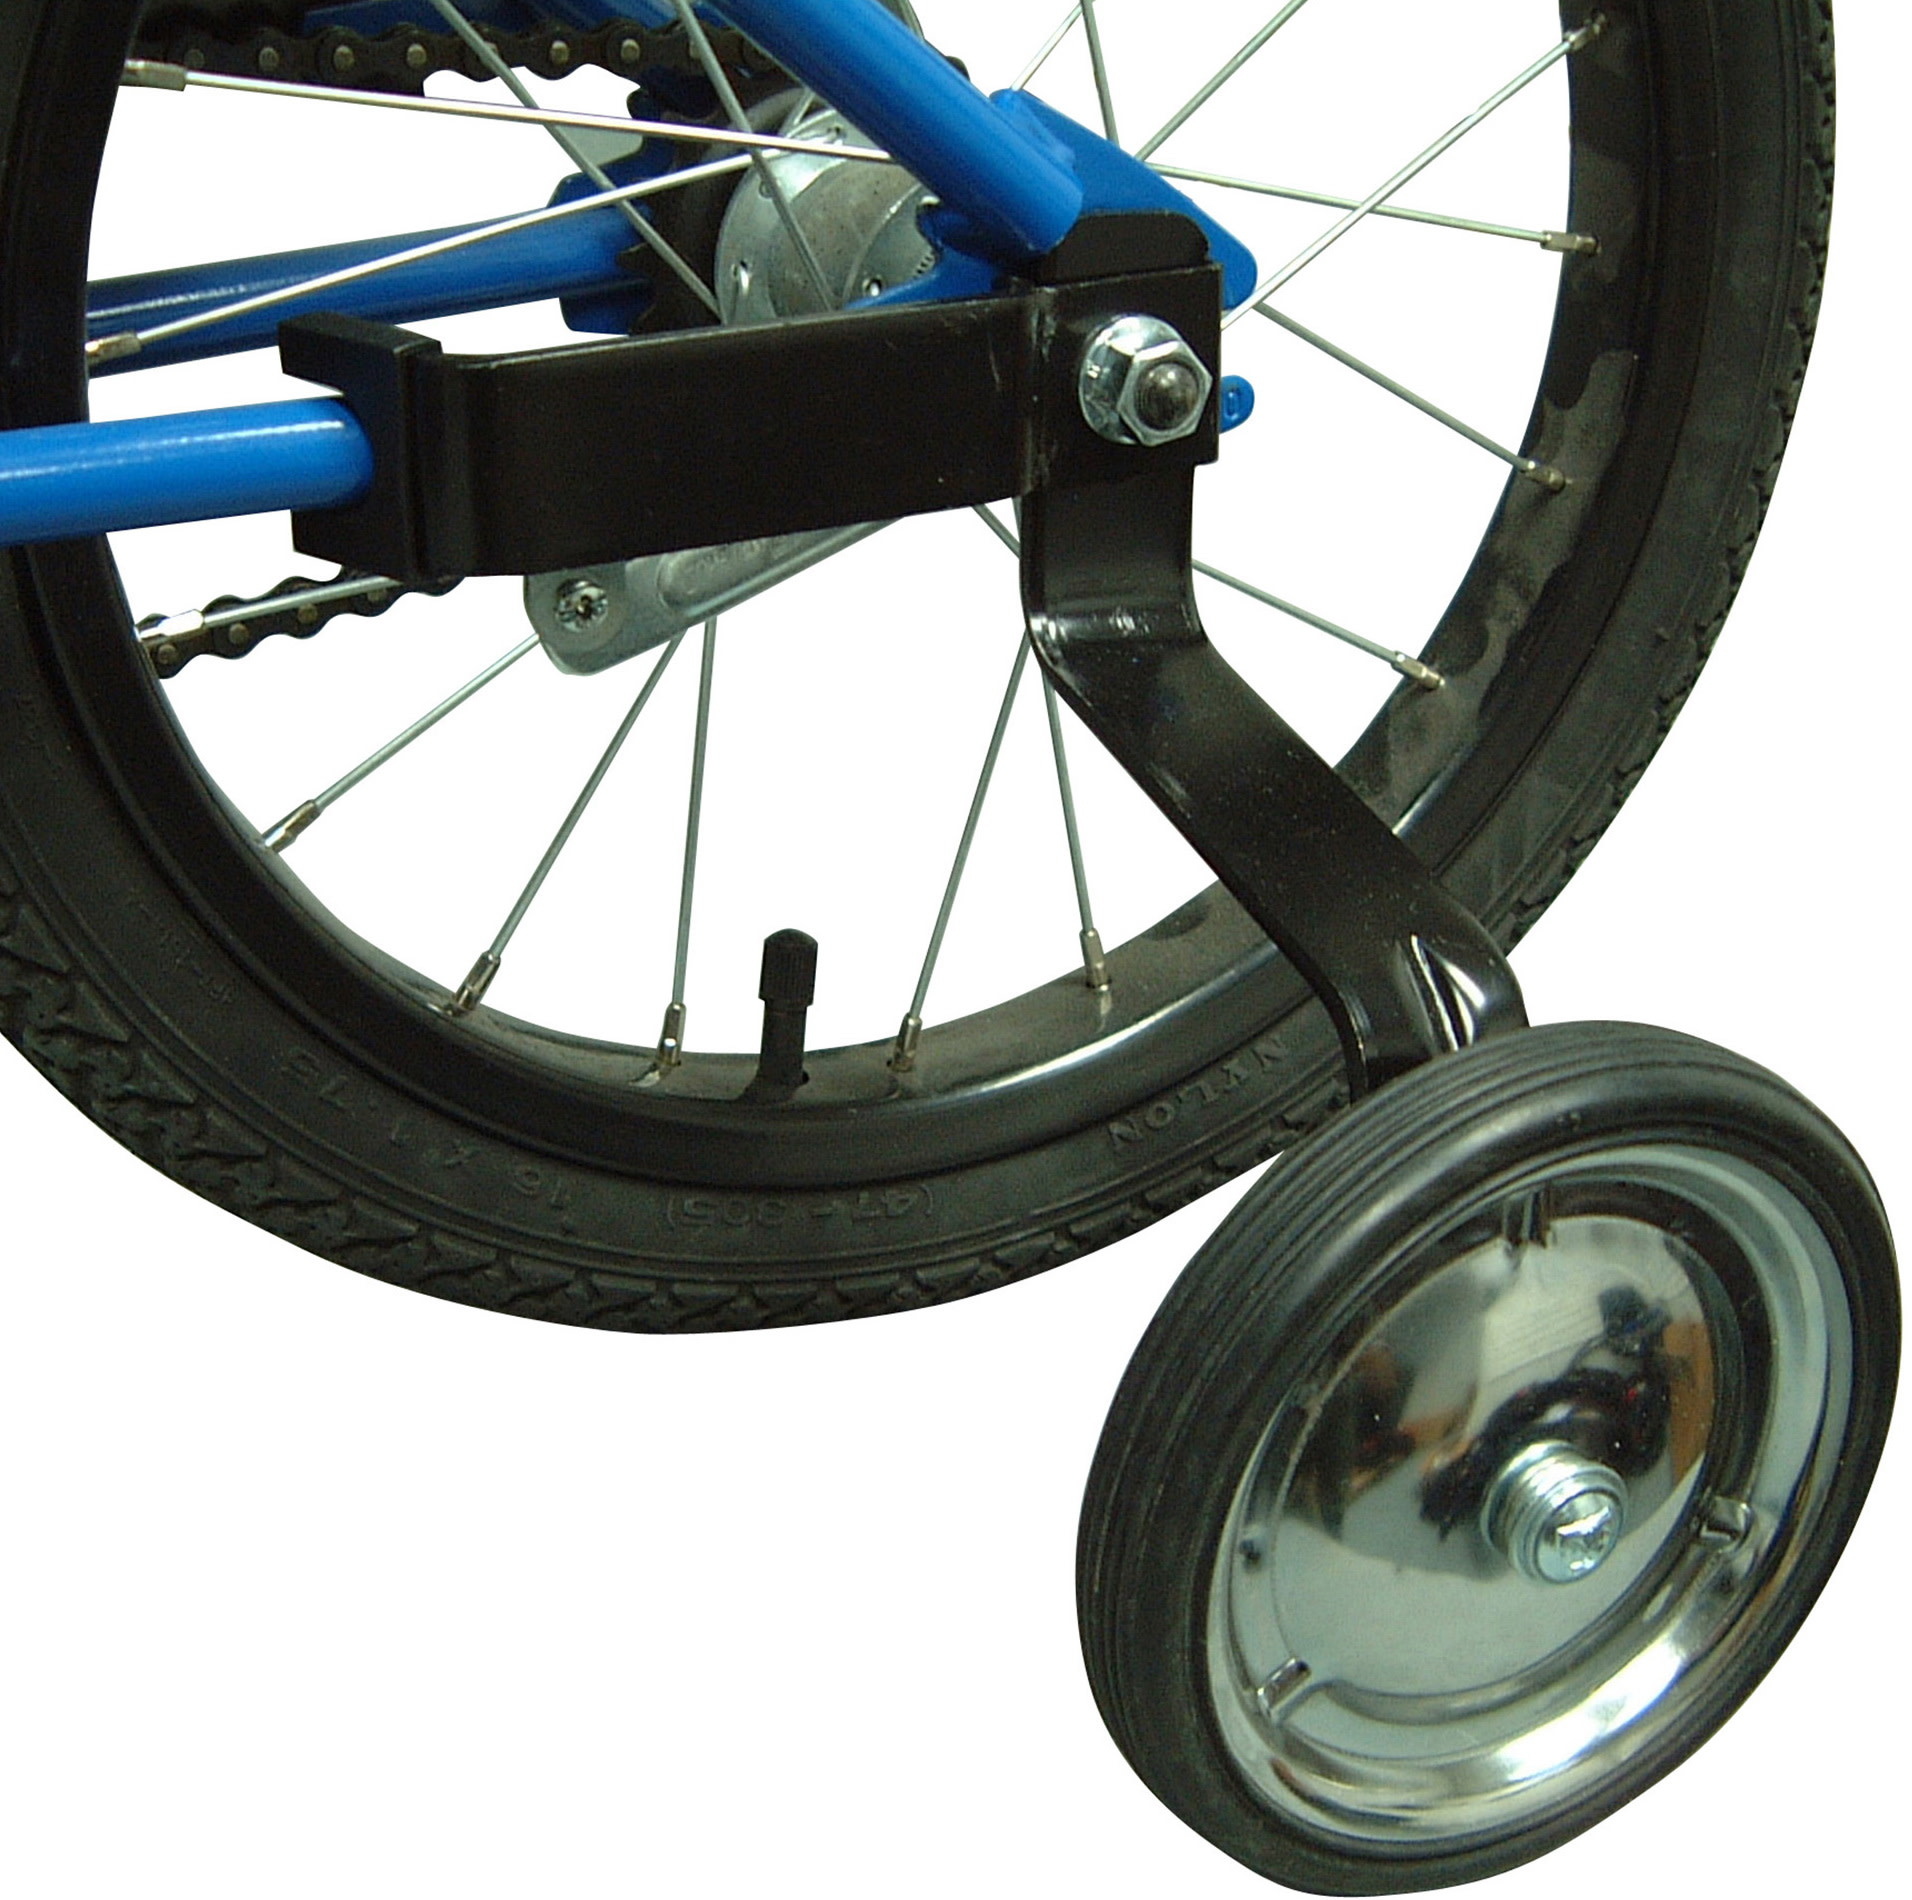 a bike with training wheels